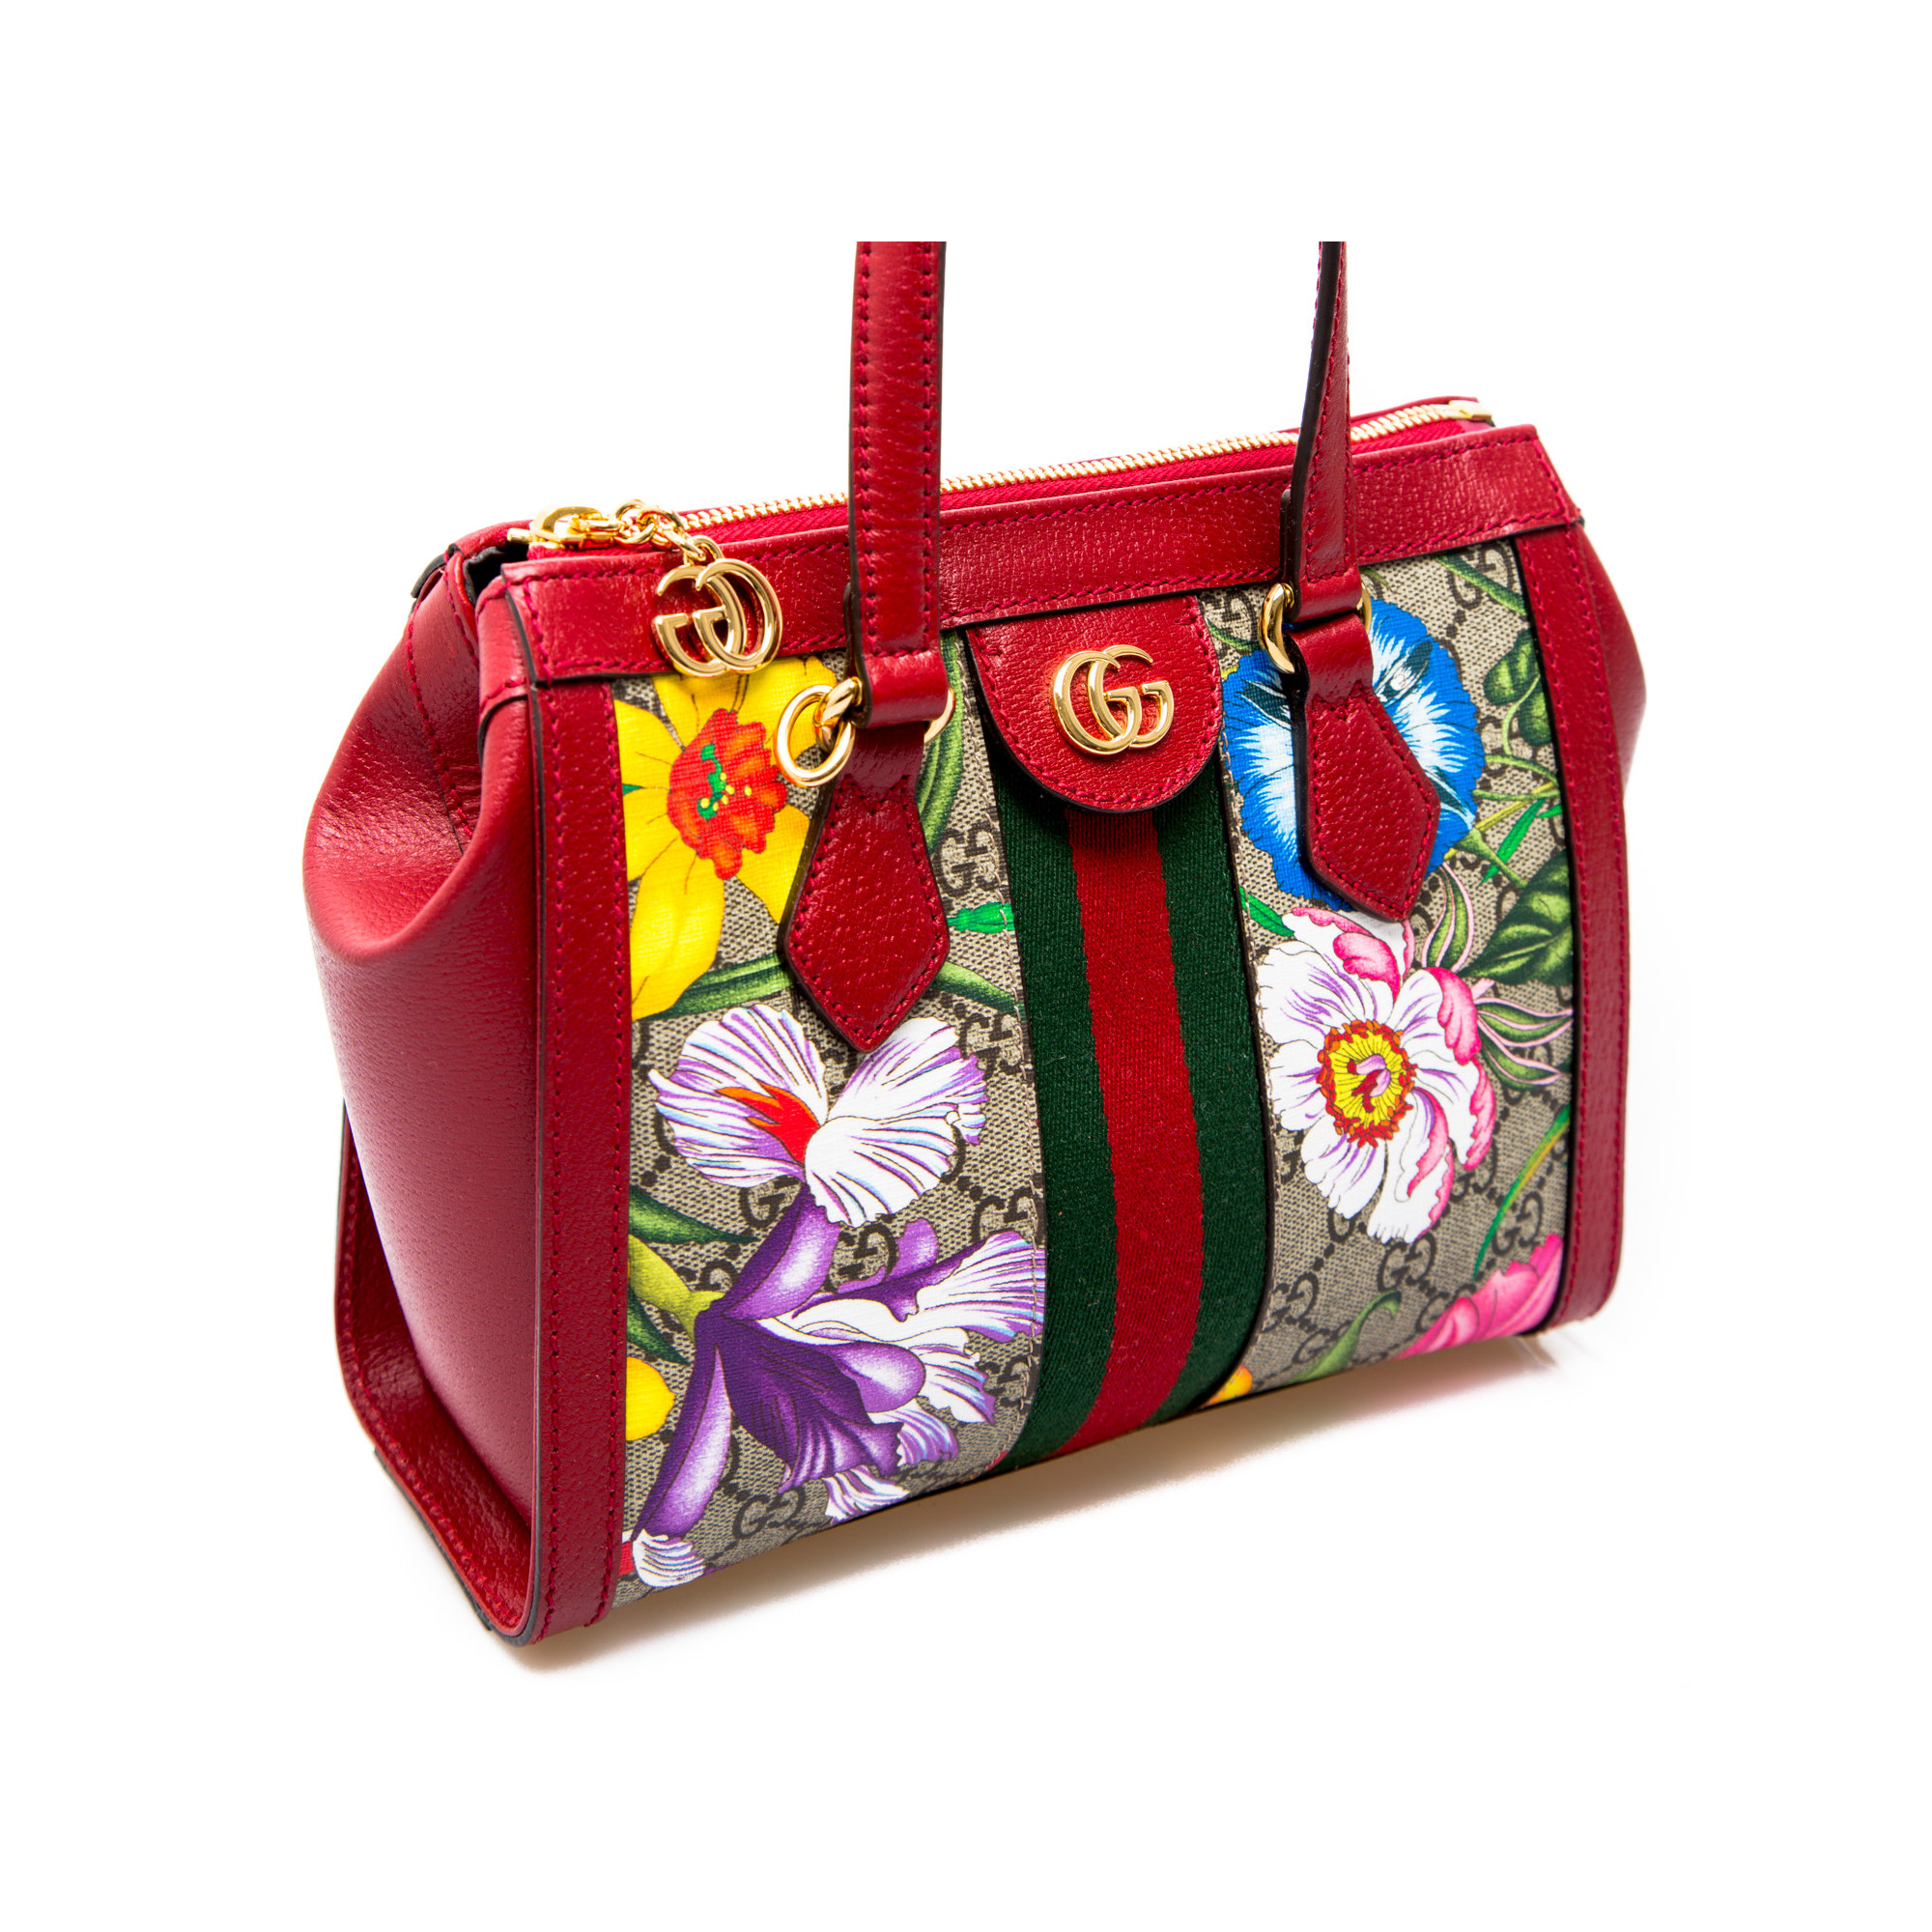 Gucci Handbag Ophidia | www.bagsaleusa.com/product-category/backpacks/